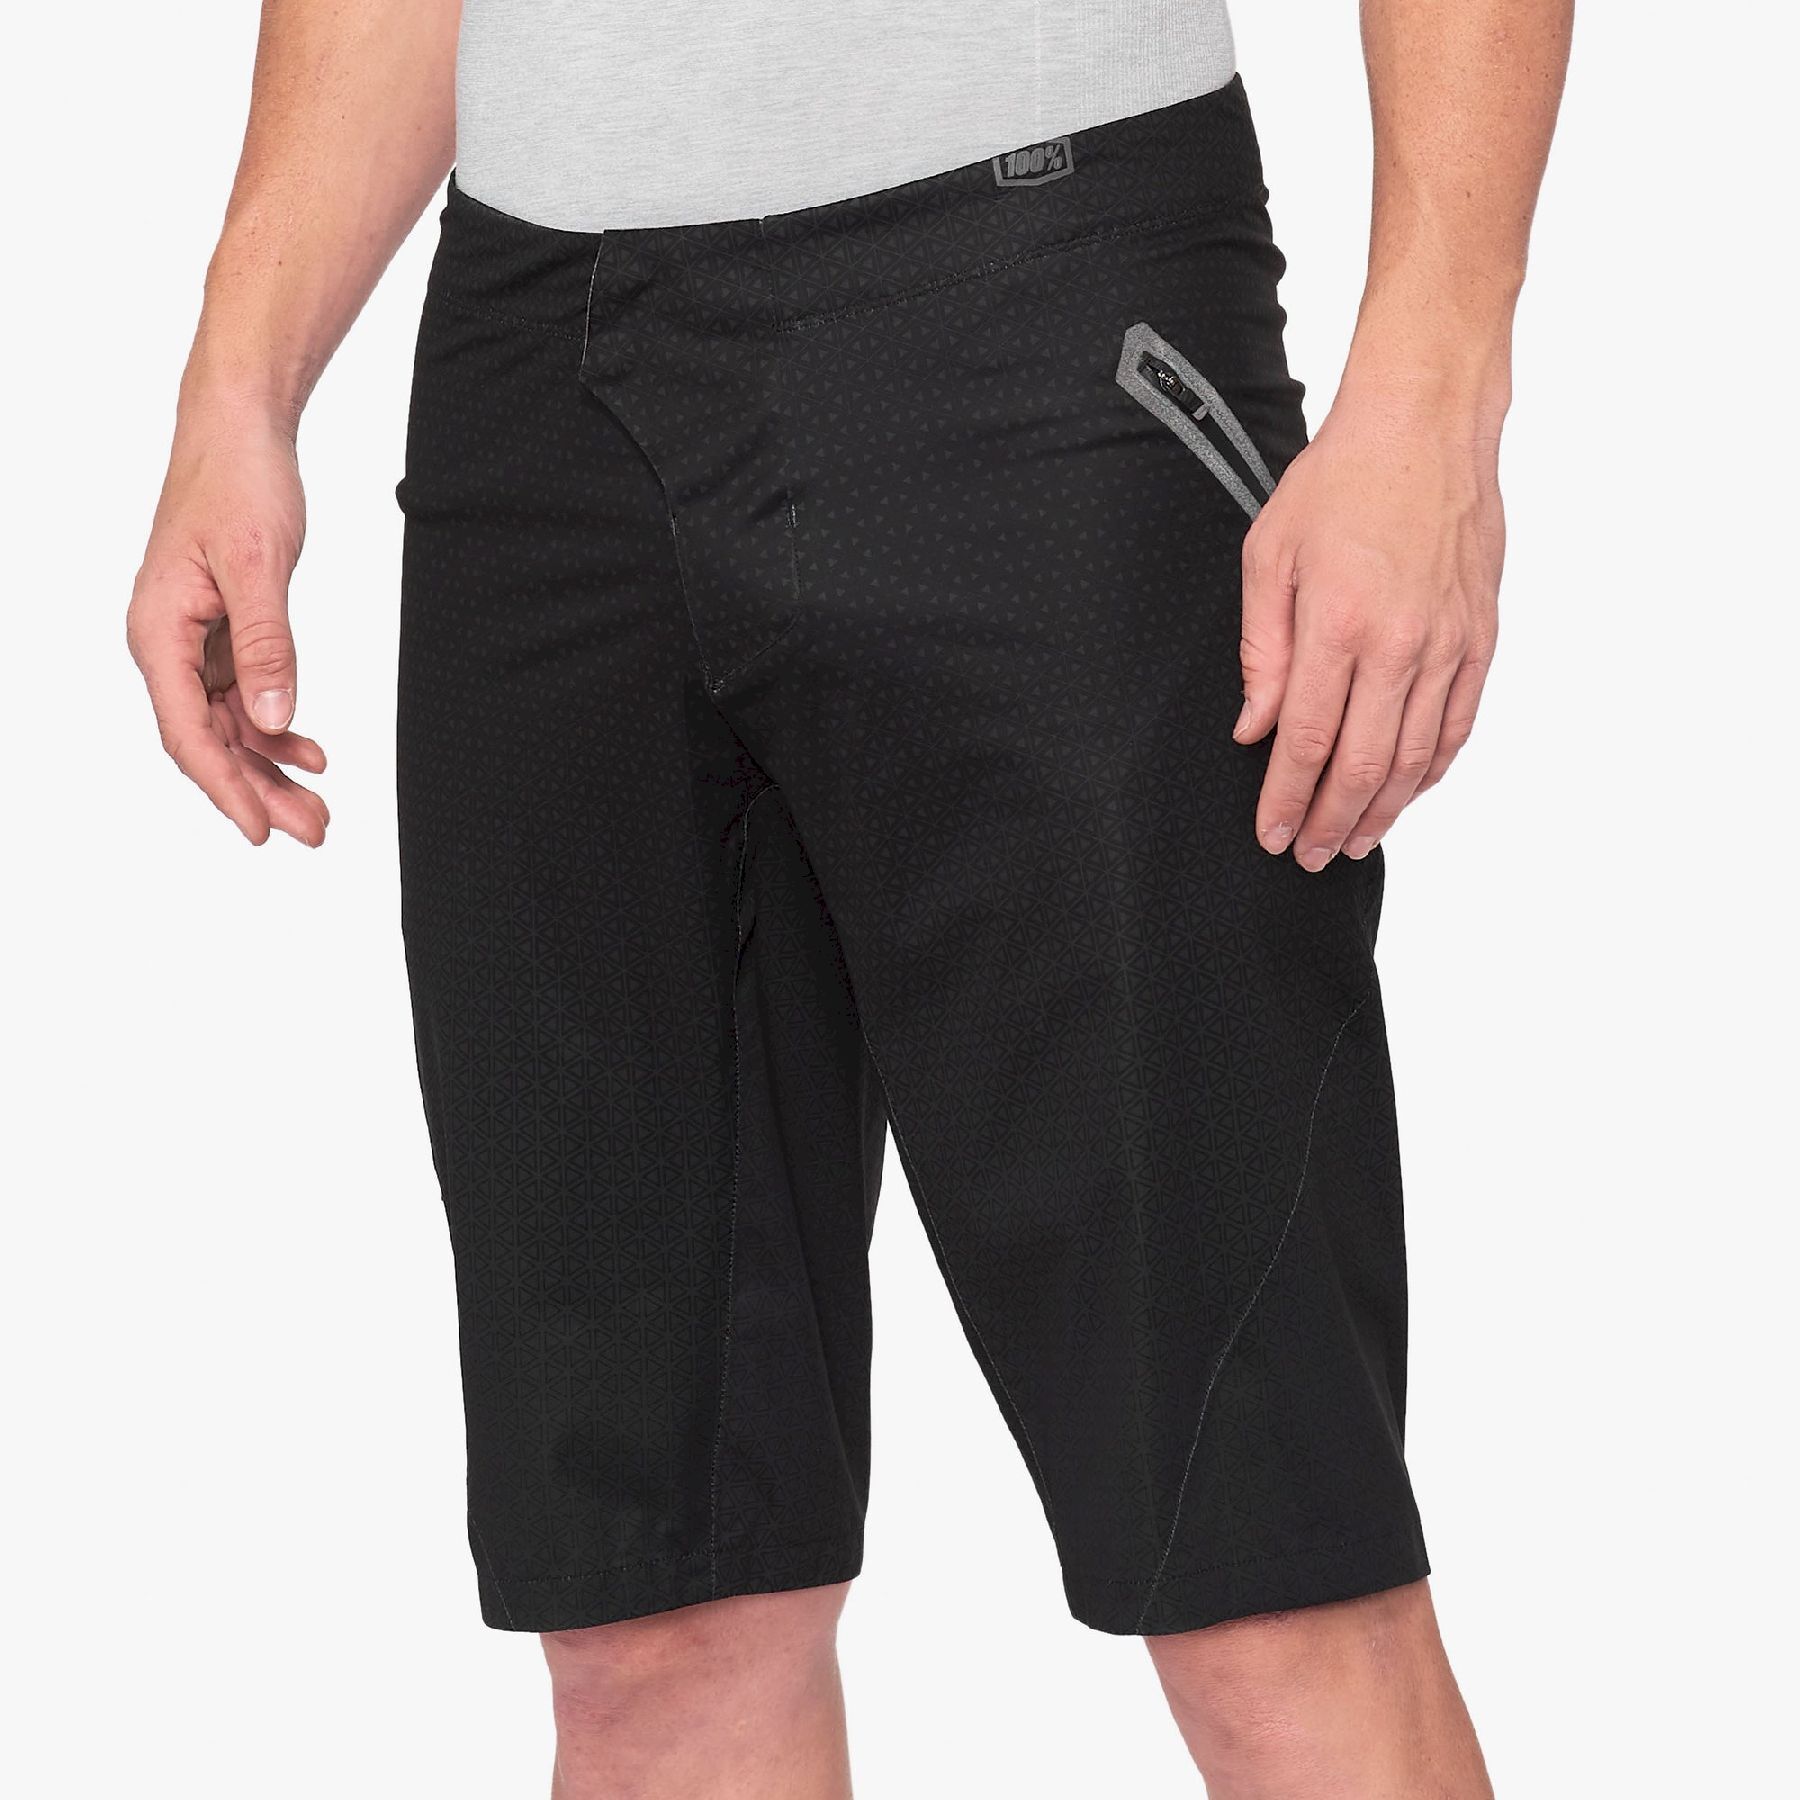 100% Hydromatic - Pantalones cortos MTB - Hombre